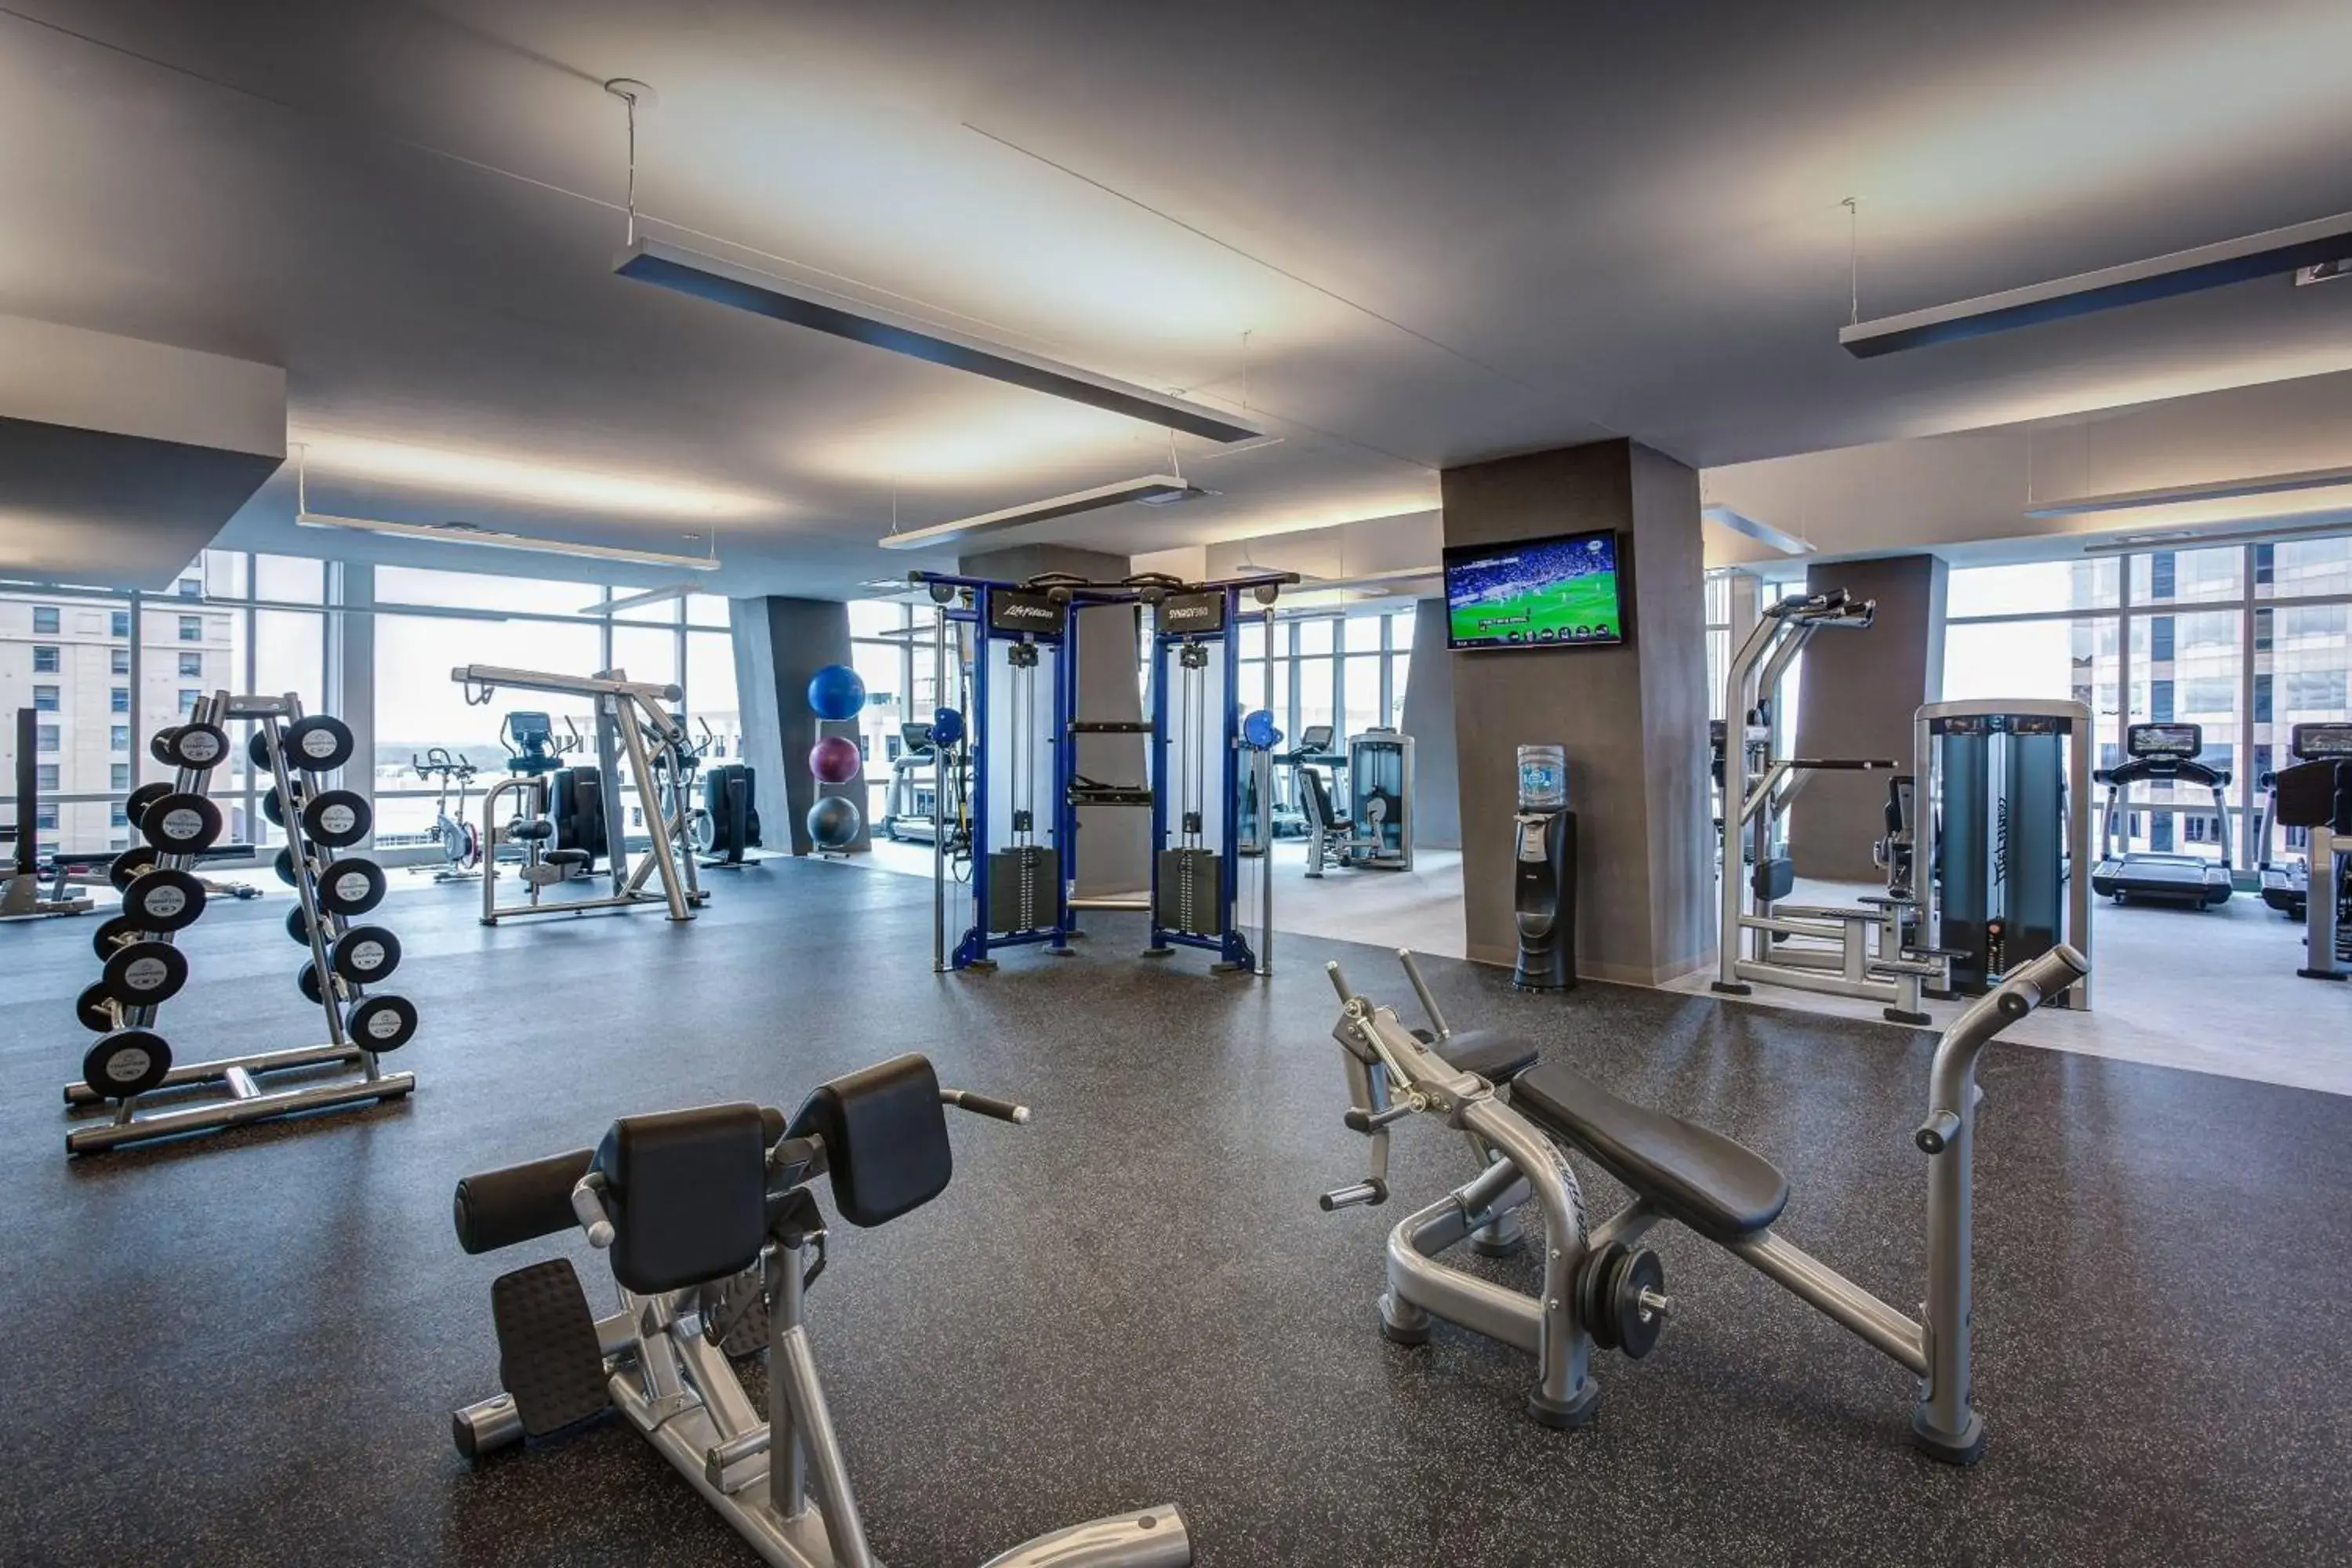 Fitness centre/facilities, Fitness Center/Facilities in JW Marriott Austin